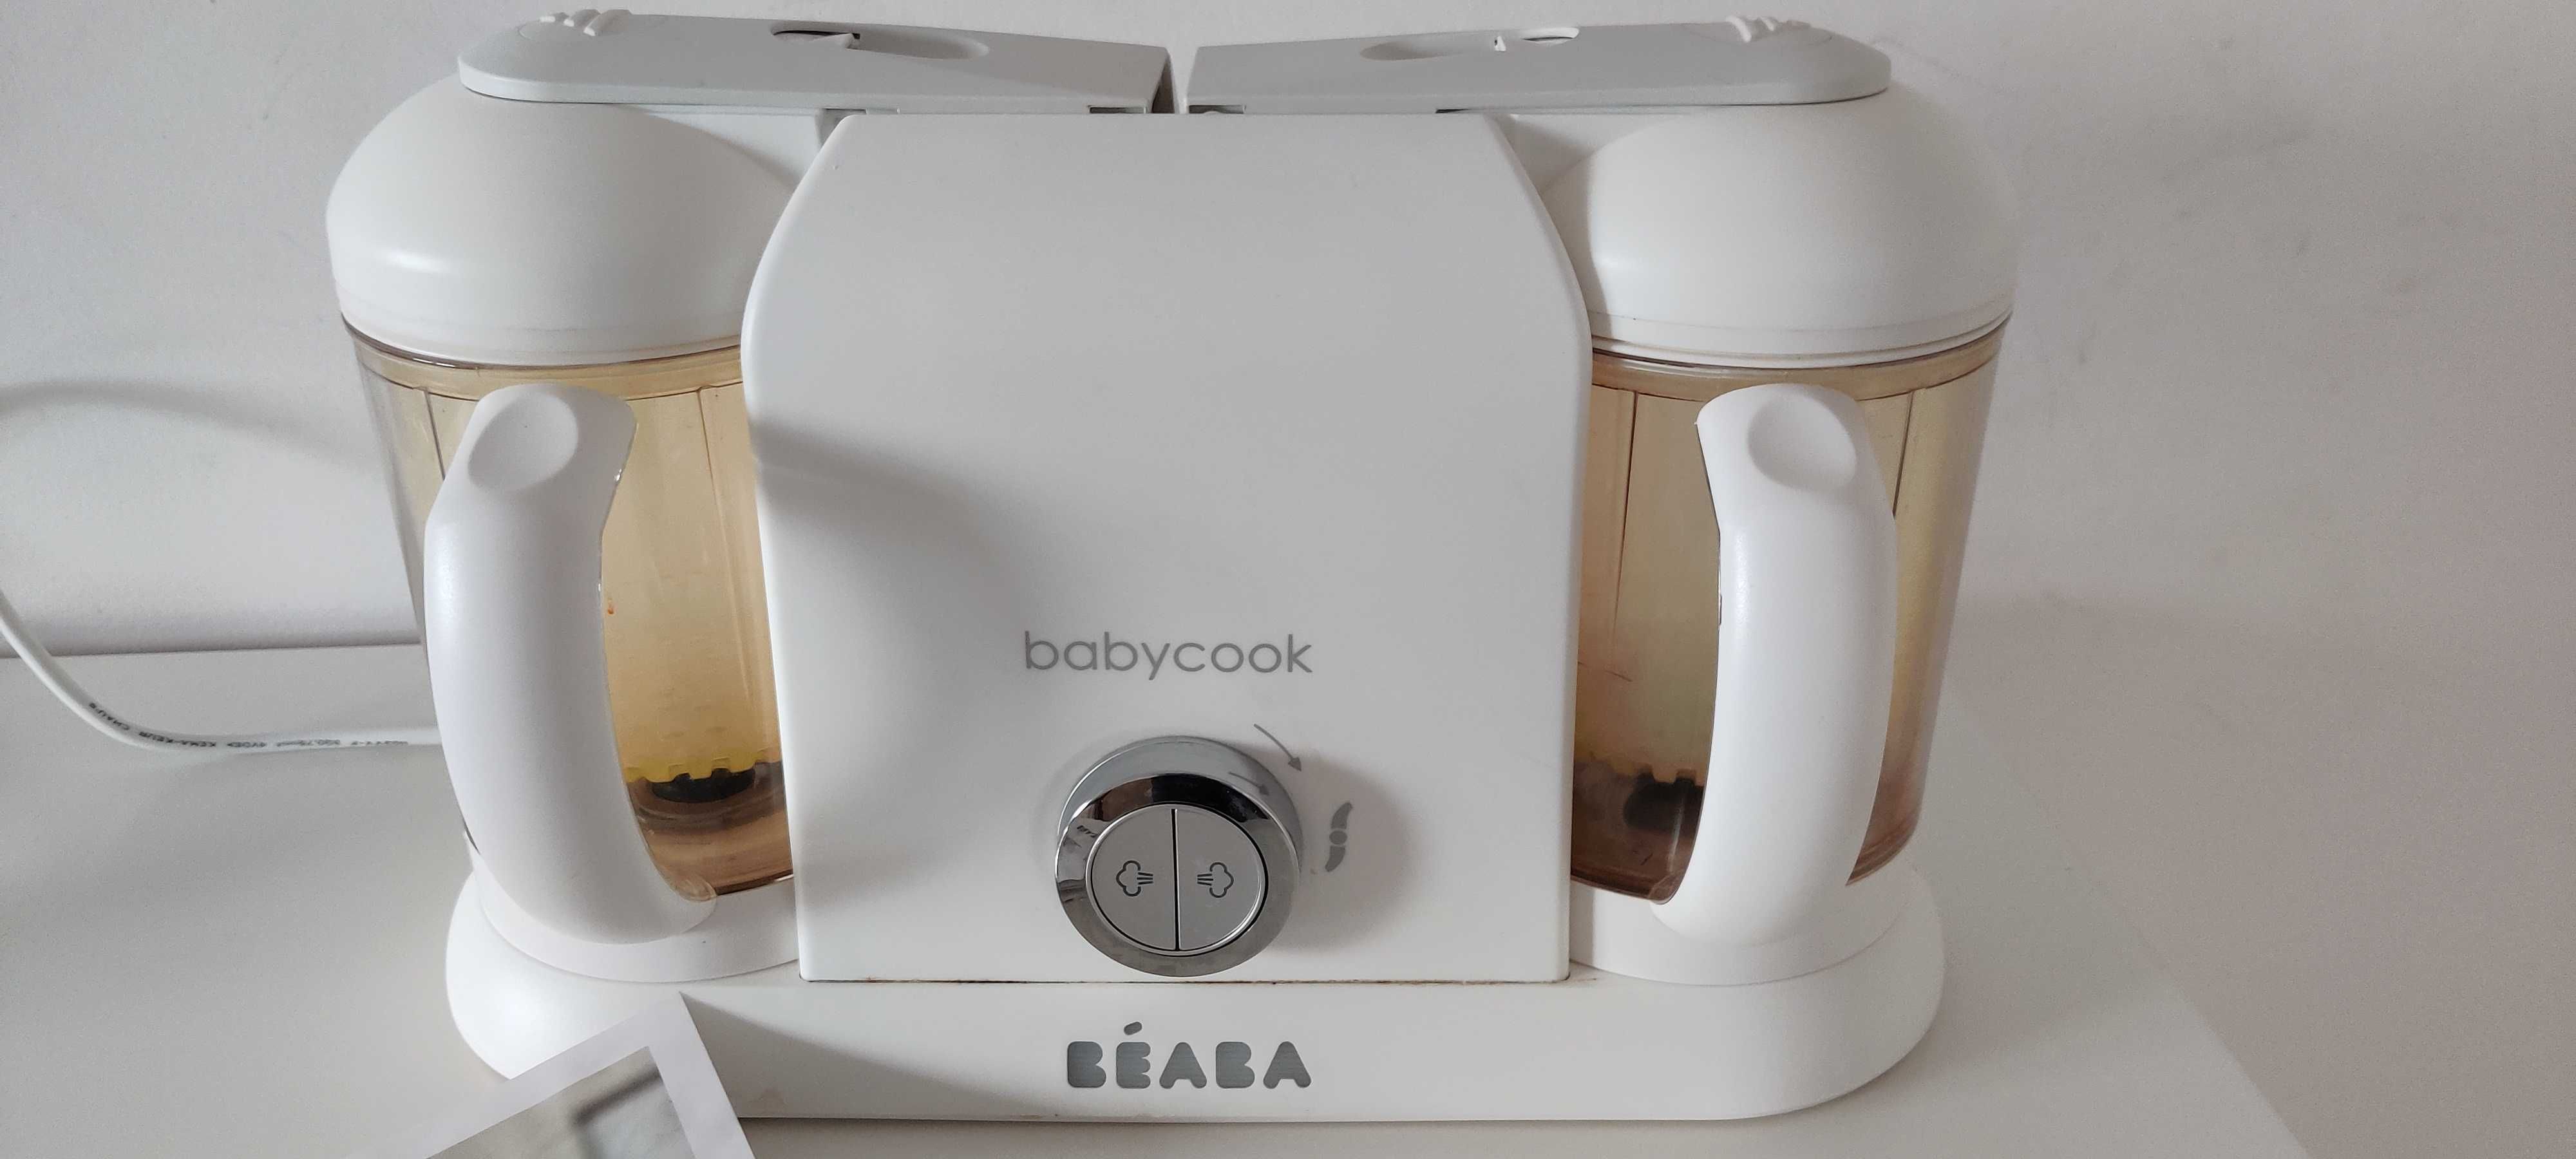 Robot Beaba babycook plus